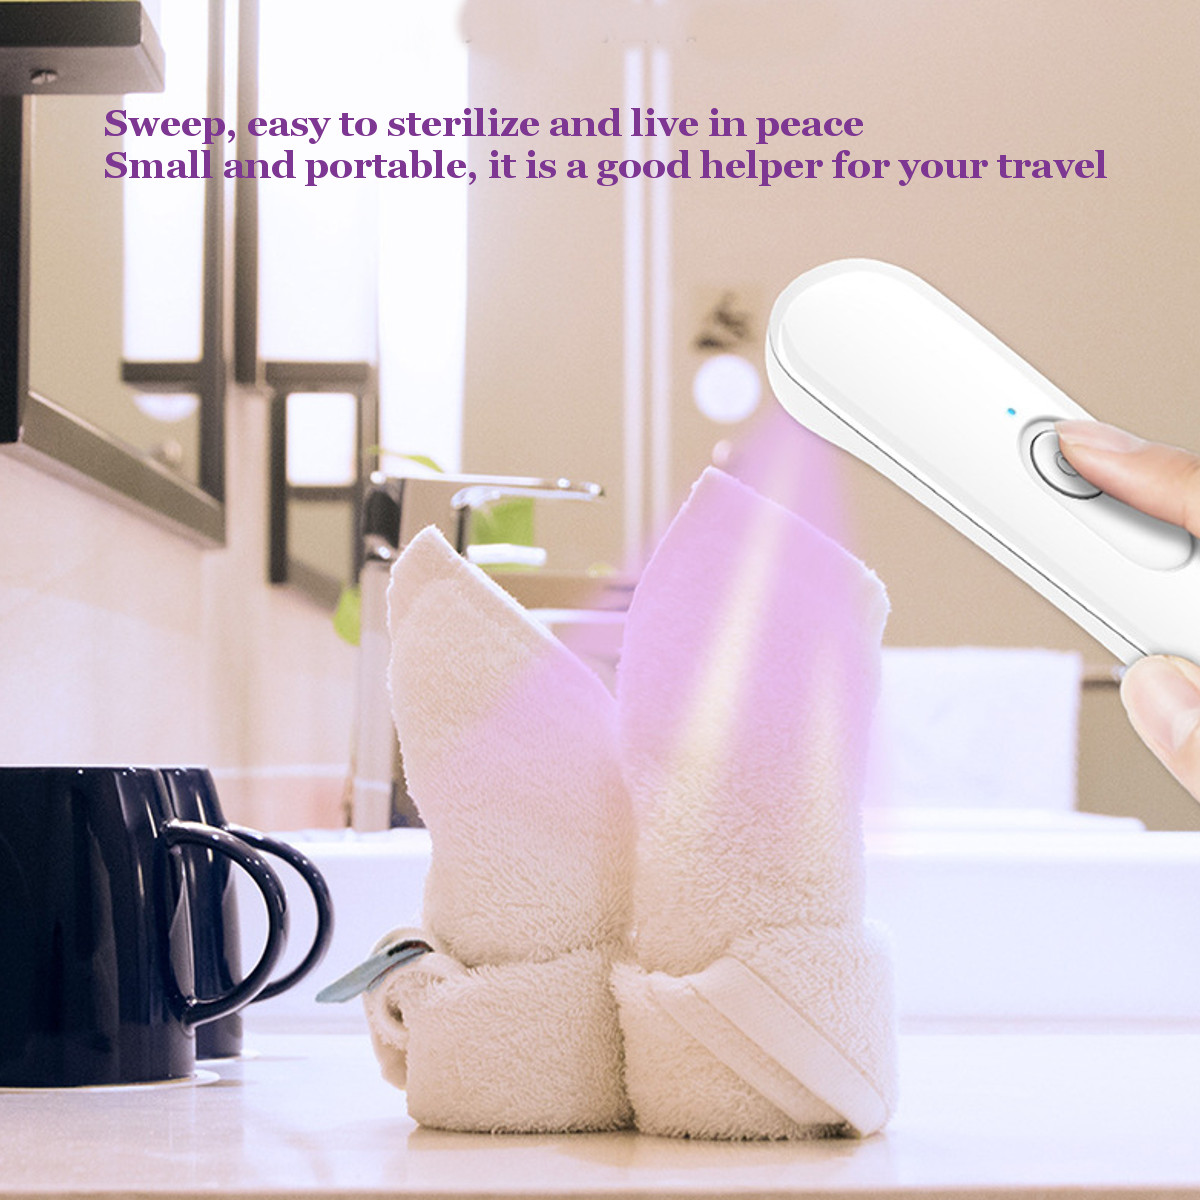 Portable-Sterilize-Germicidal-UV-Lamp-Home-Handheld-Disinfection-Light-Bulb-Home-1672442-7